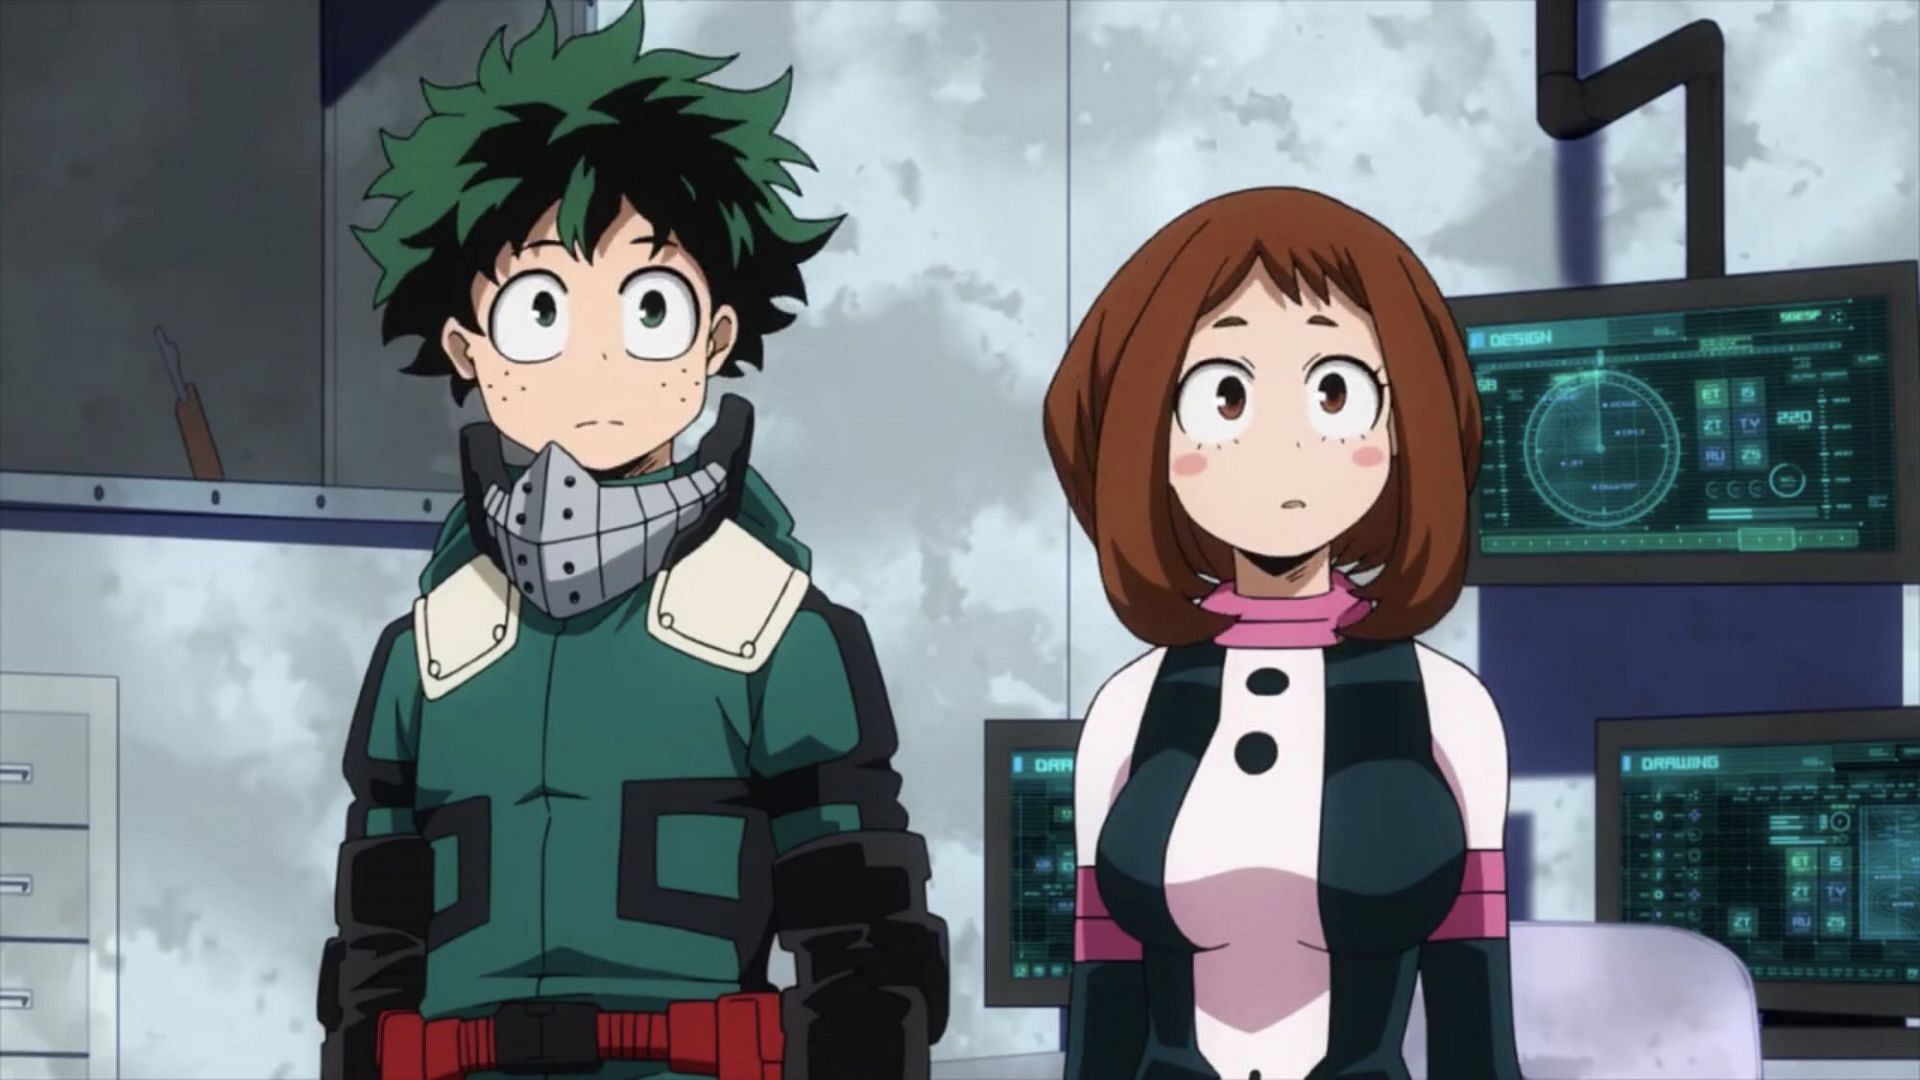 Midoriya (left) and Uraraka (right) in the My Hero Academia anime (Image via Bones)